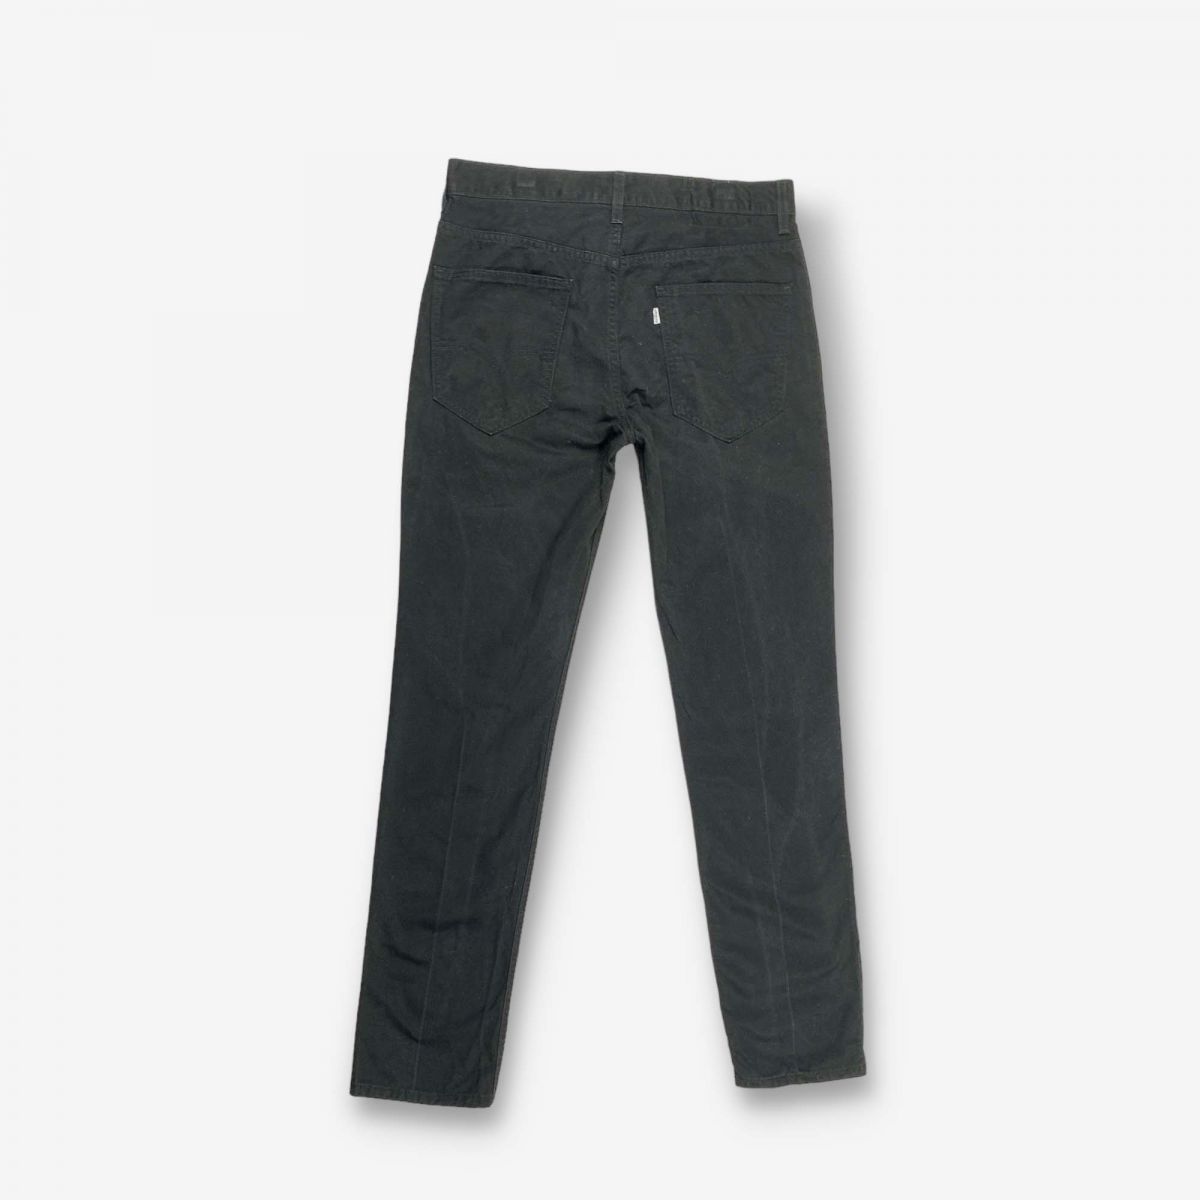 LEVIS STRAUSS 504 Mens W31 L34 Jeans Denim Pants Trousers Straight Zip Black  | eBay